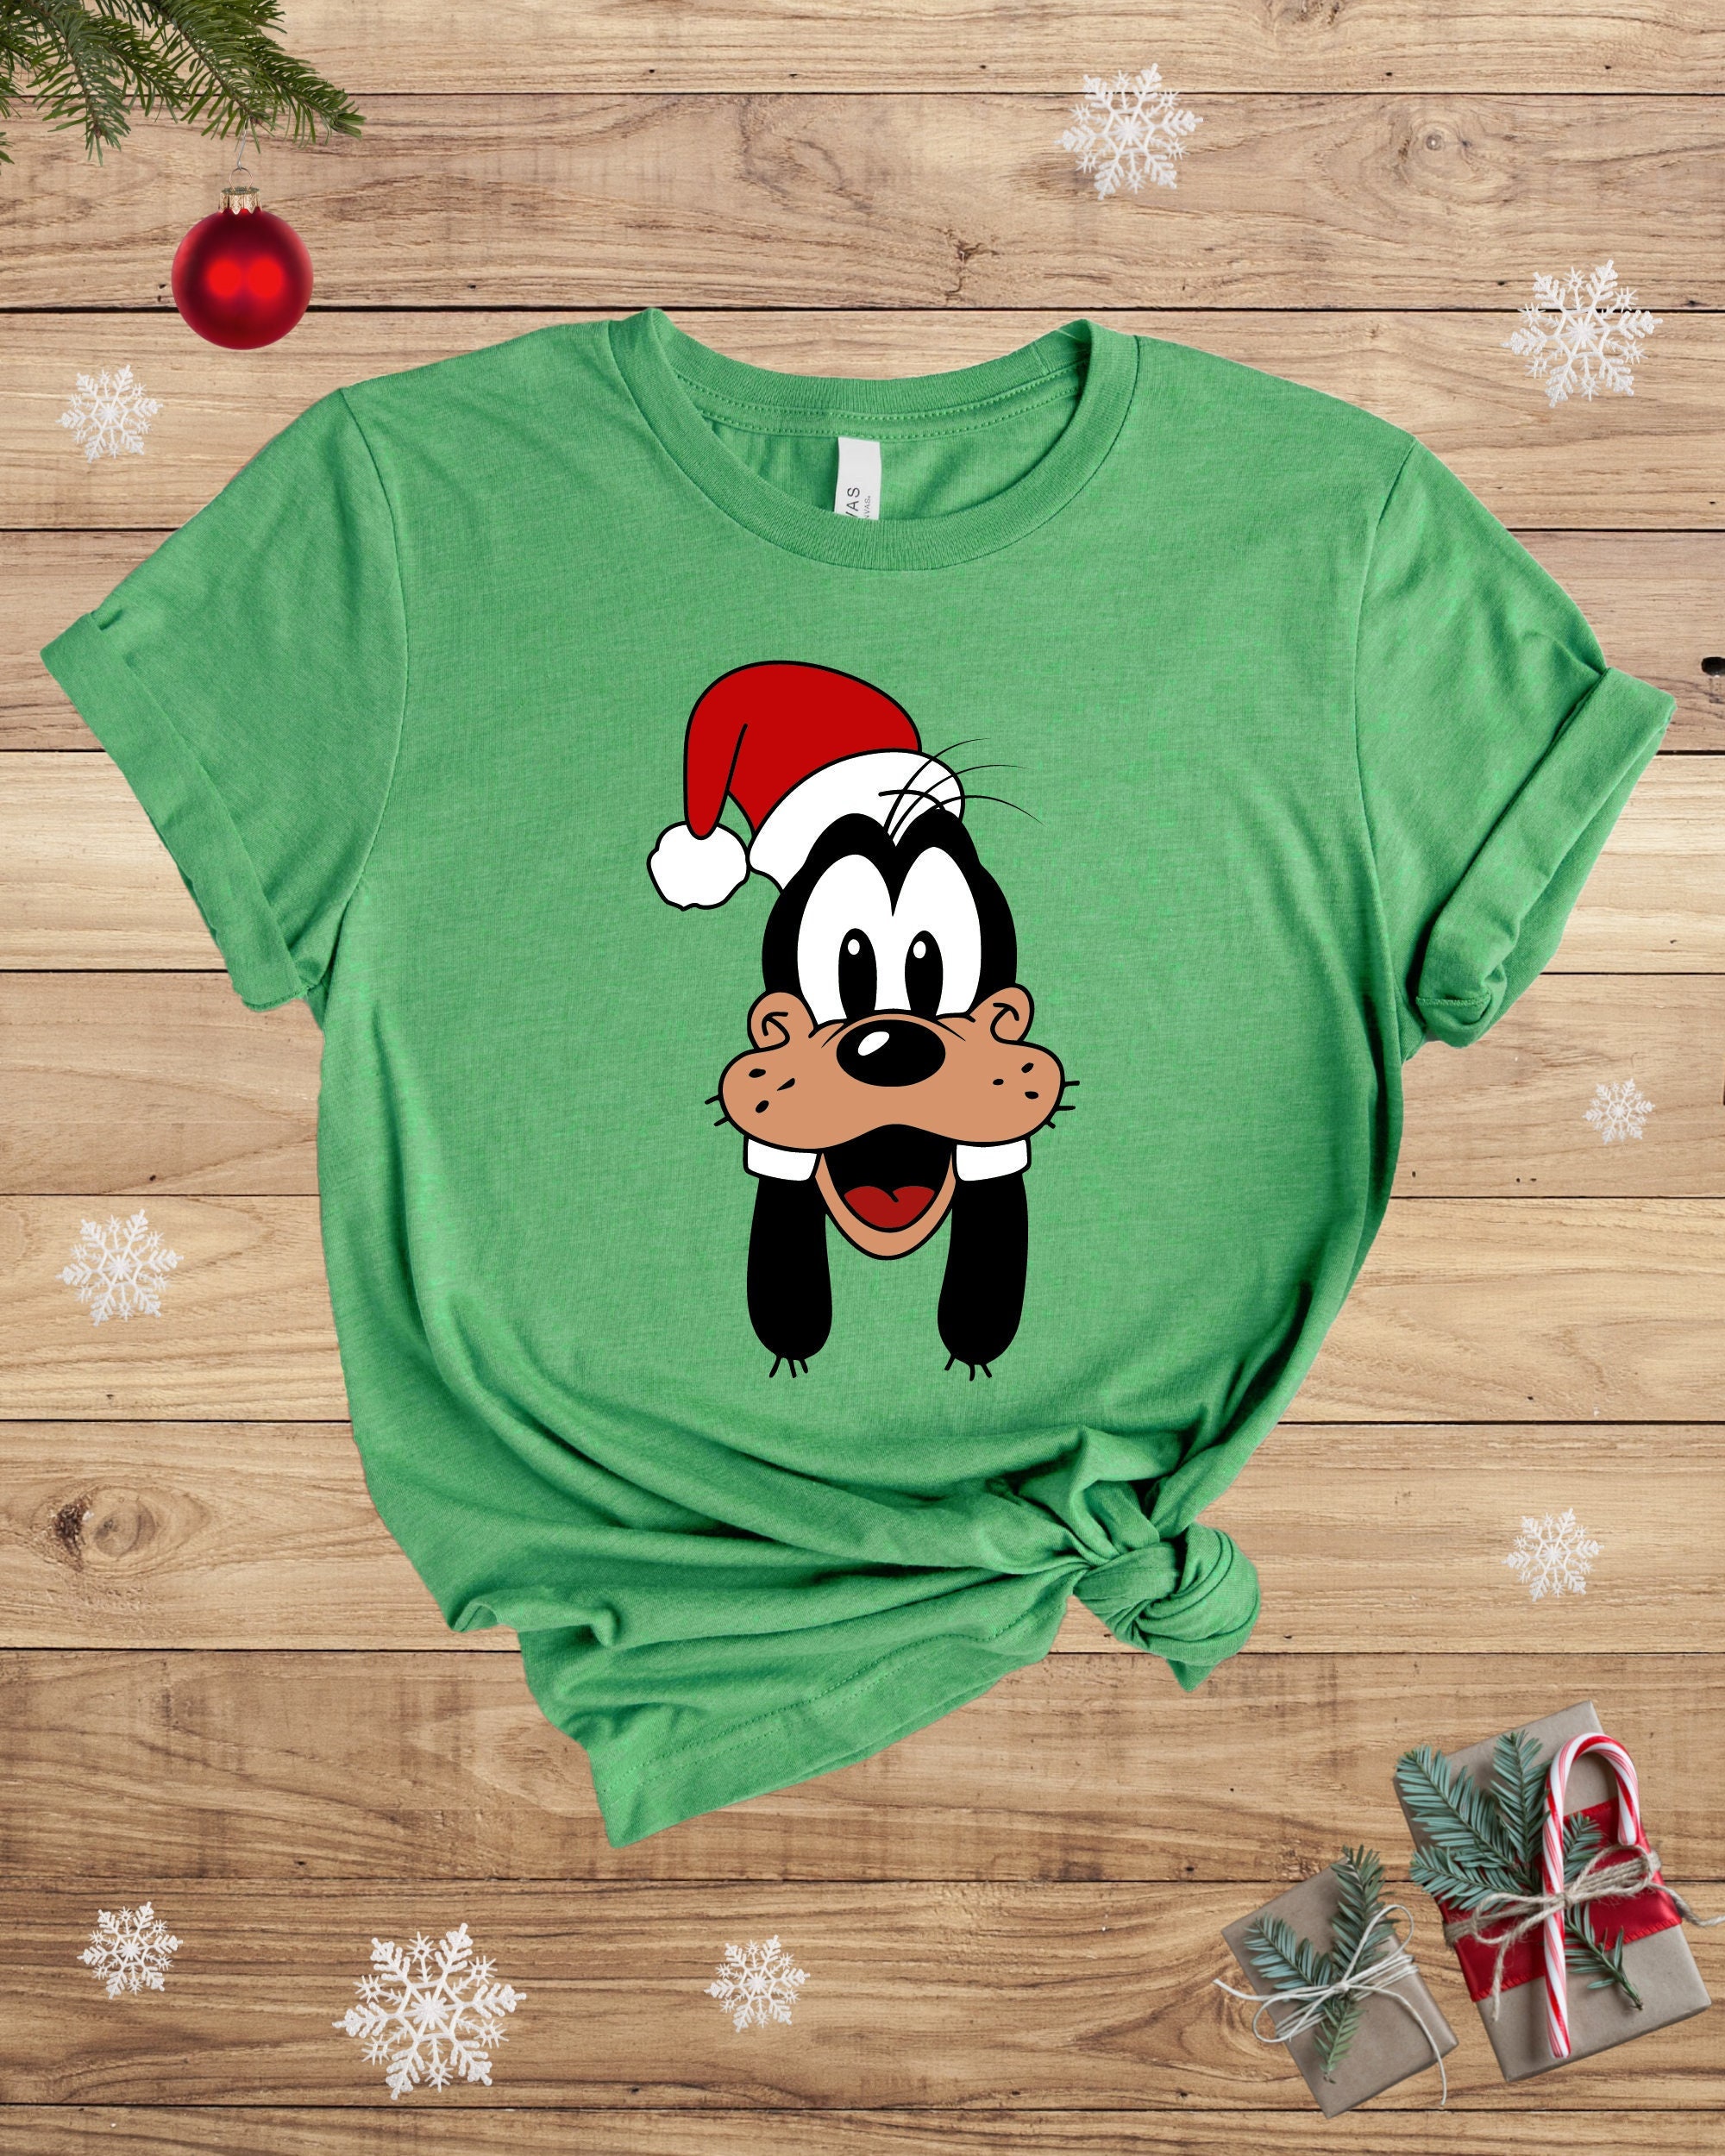 Discover Christmas Disney Goofy Shirt, Mickey's Friend Goofy Tee